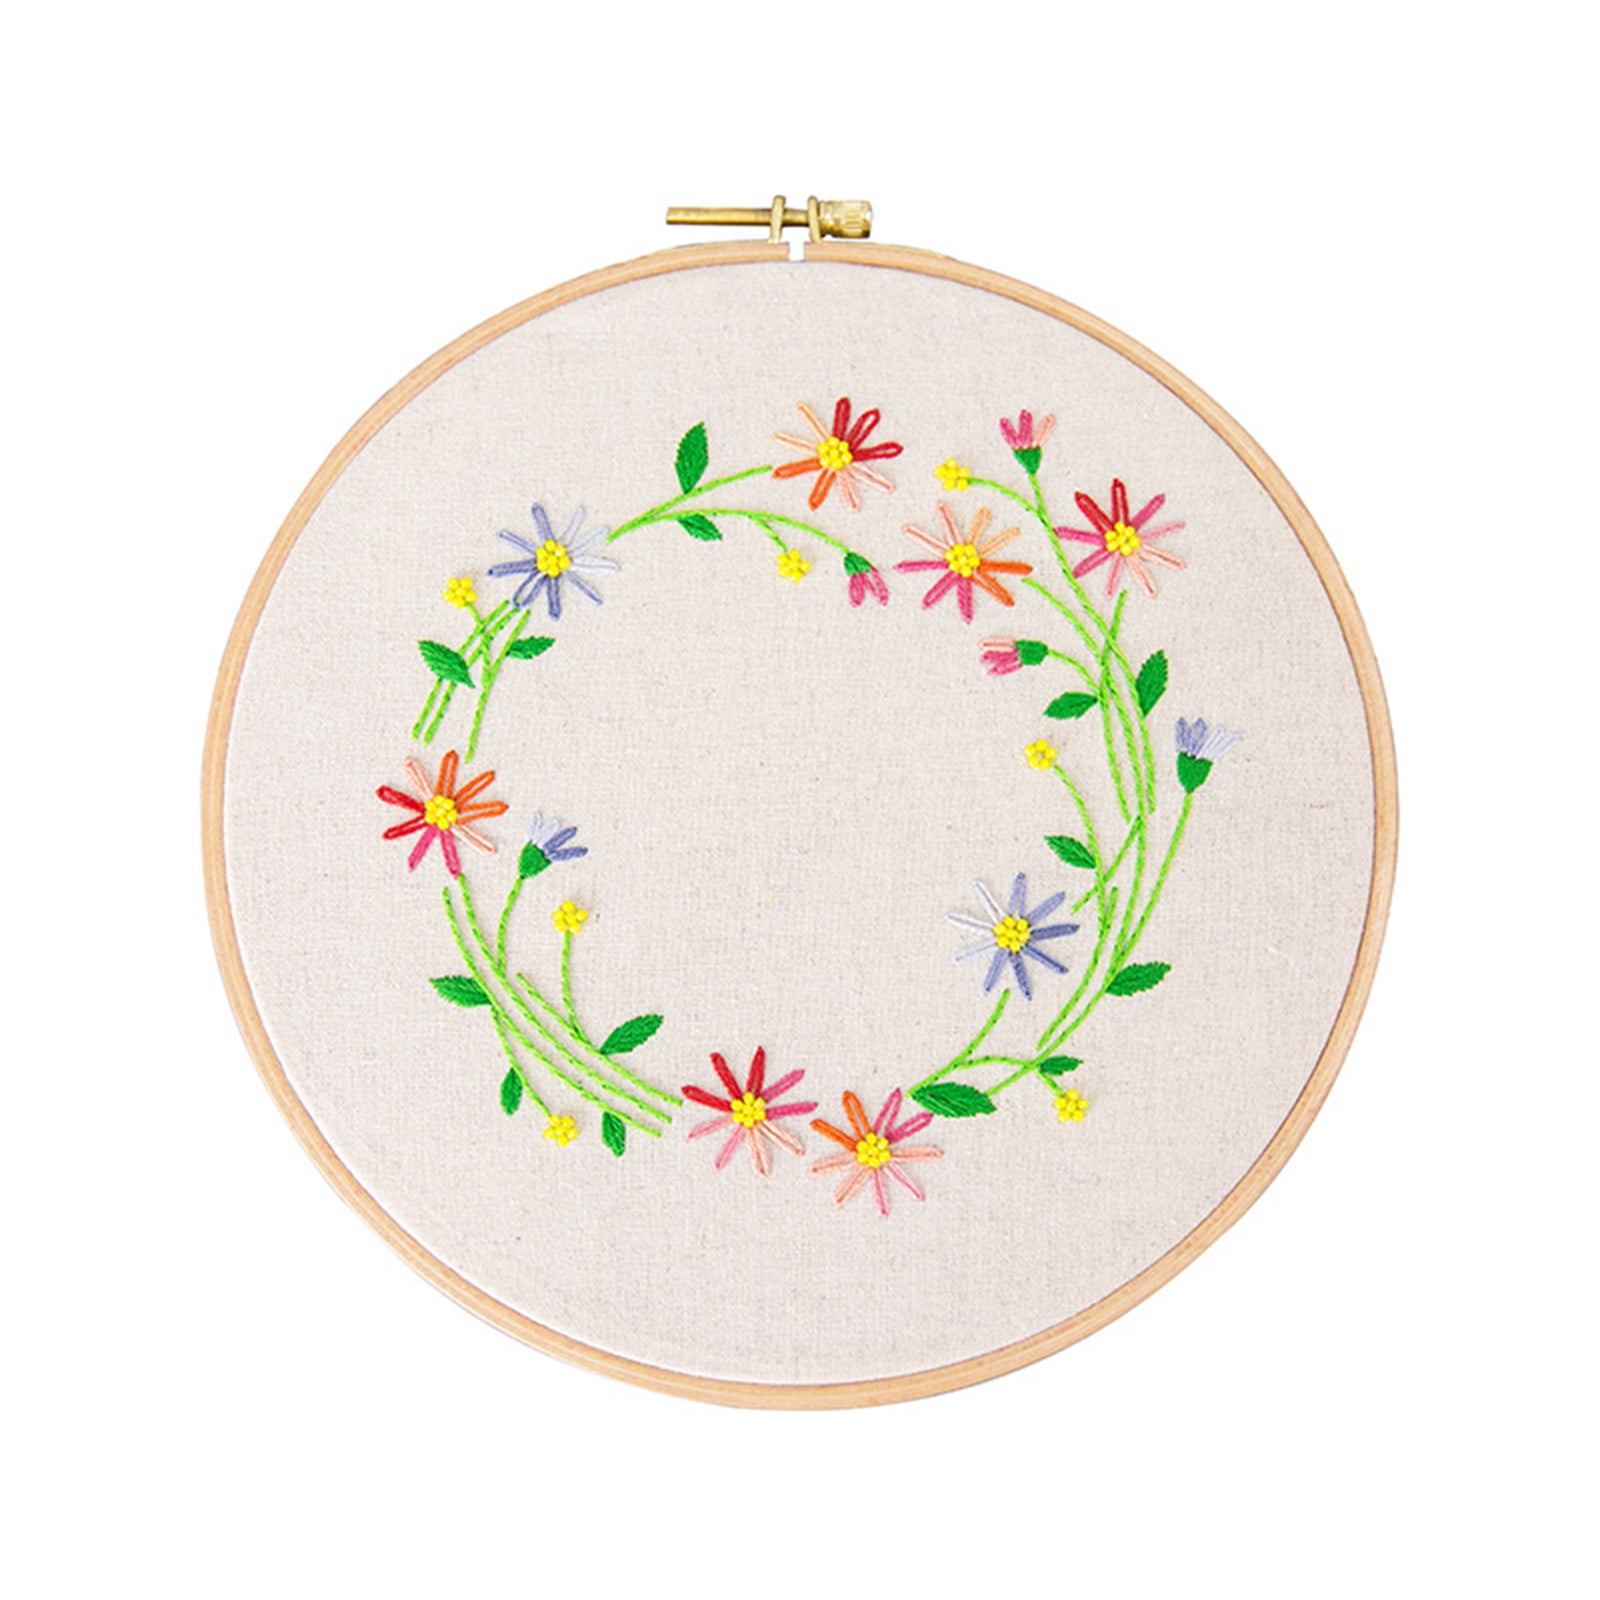 DIY Embroidery Kit for Beginners Flower Pattern Cross Stitch Needlework+Hoop SU 